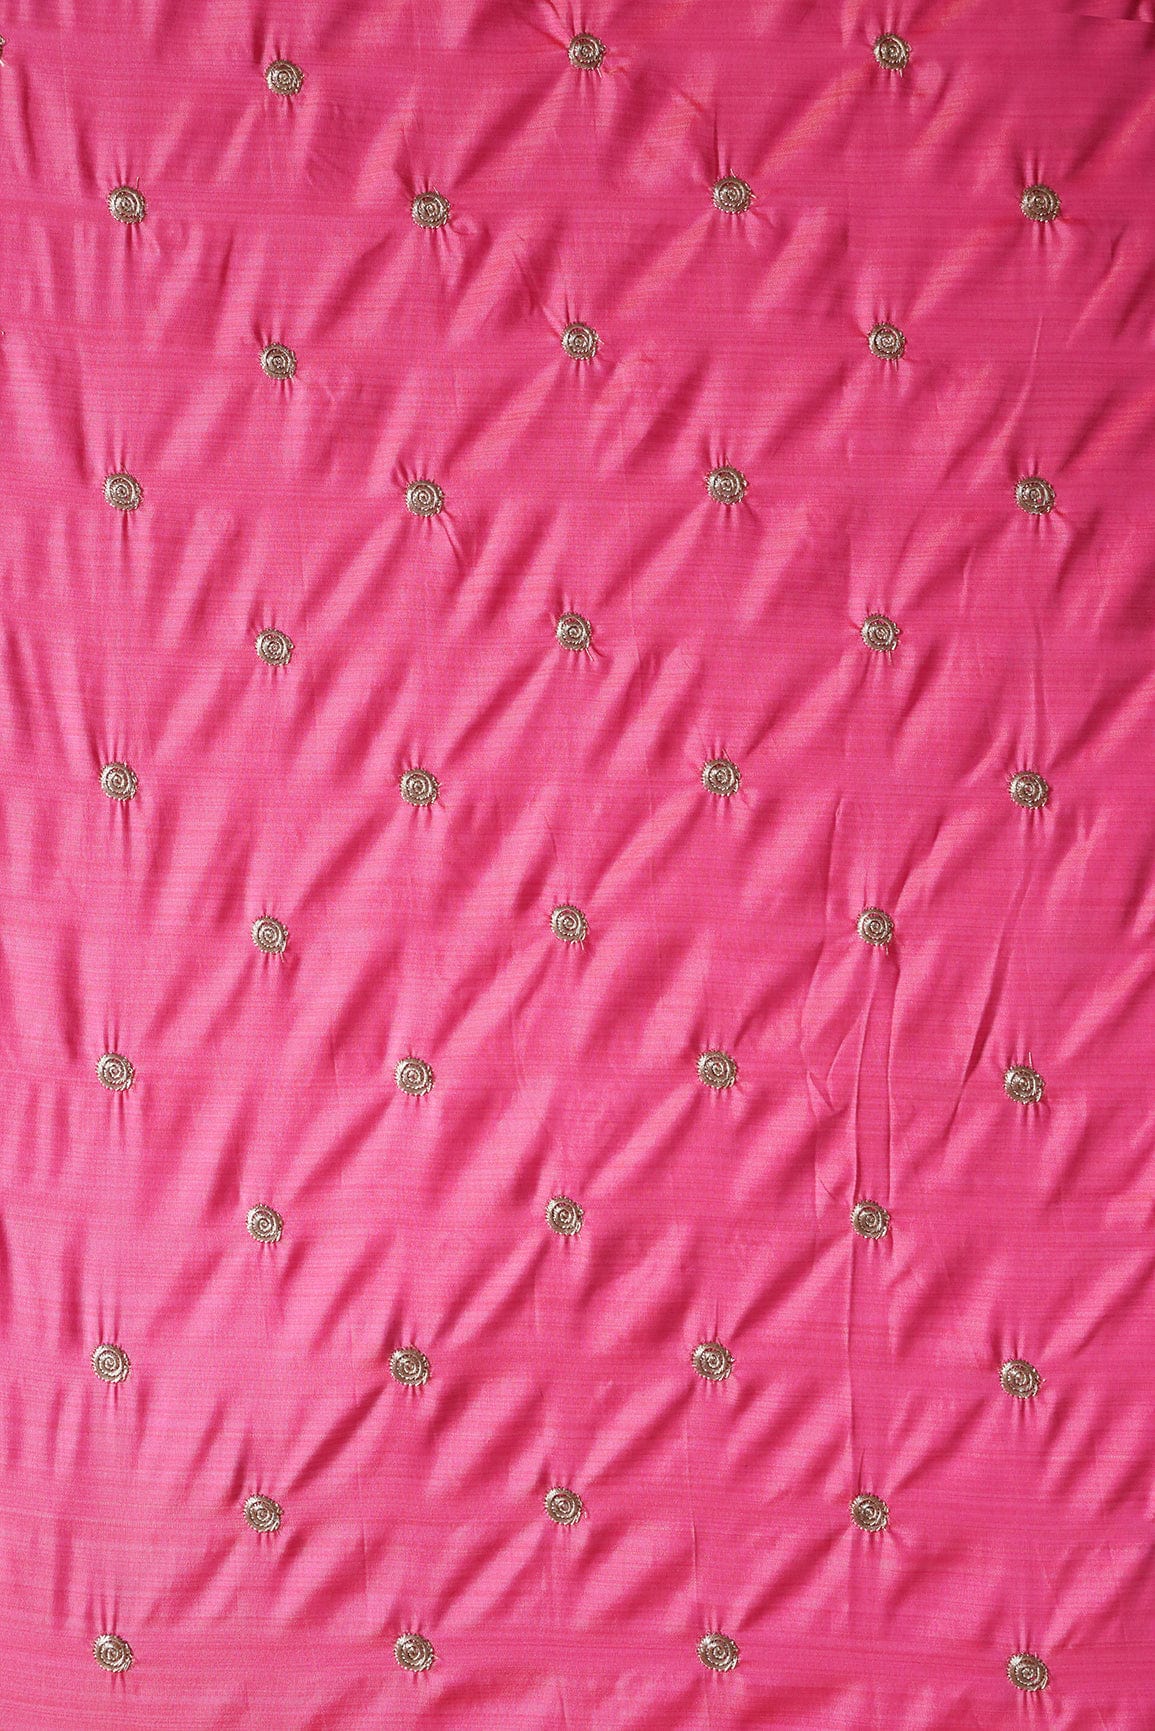 doeraa Embroidery Fabrics Gold Zari Small Motif Embroidery Work On Dark Pink Bamboo Silk Fabric